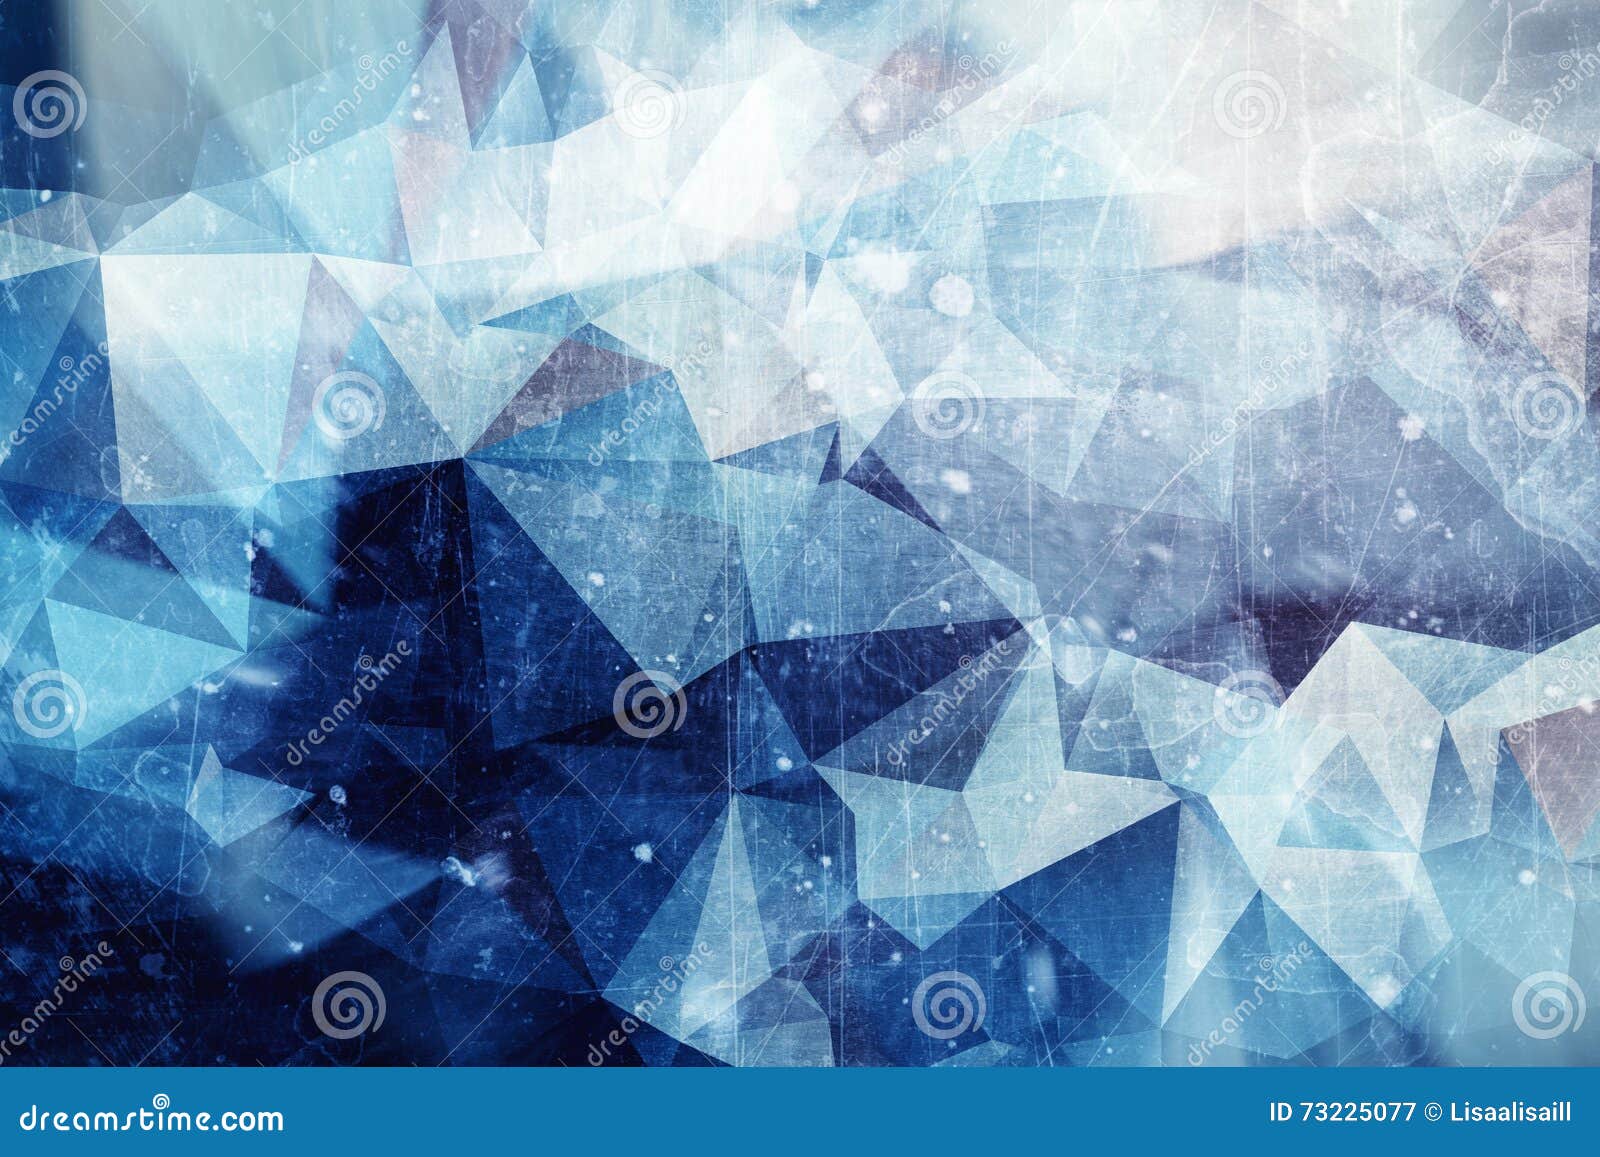 Iced Abstract Background - Winter Ice Illustration Stock Illustration ...